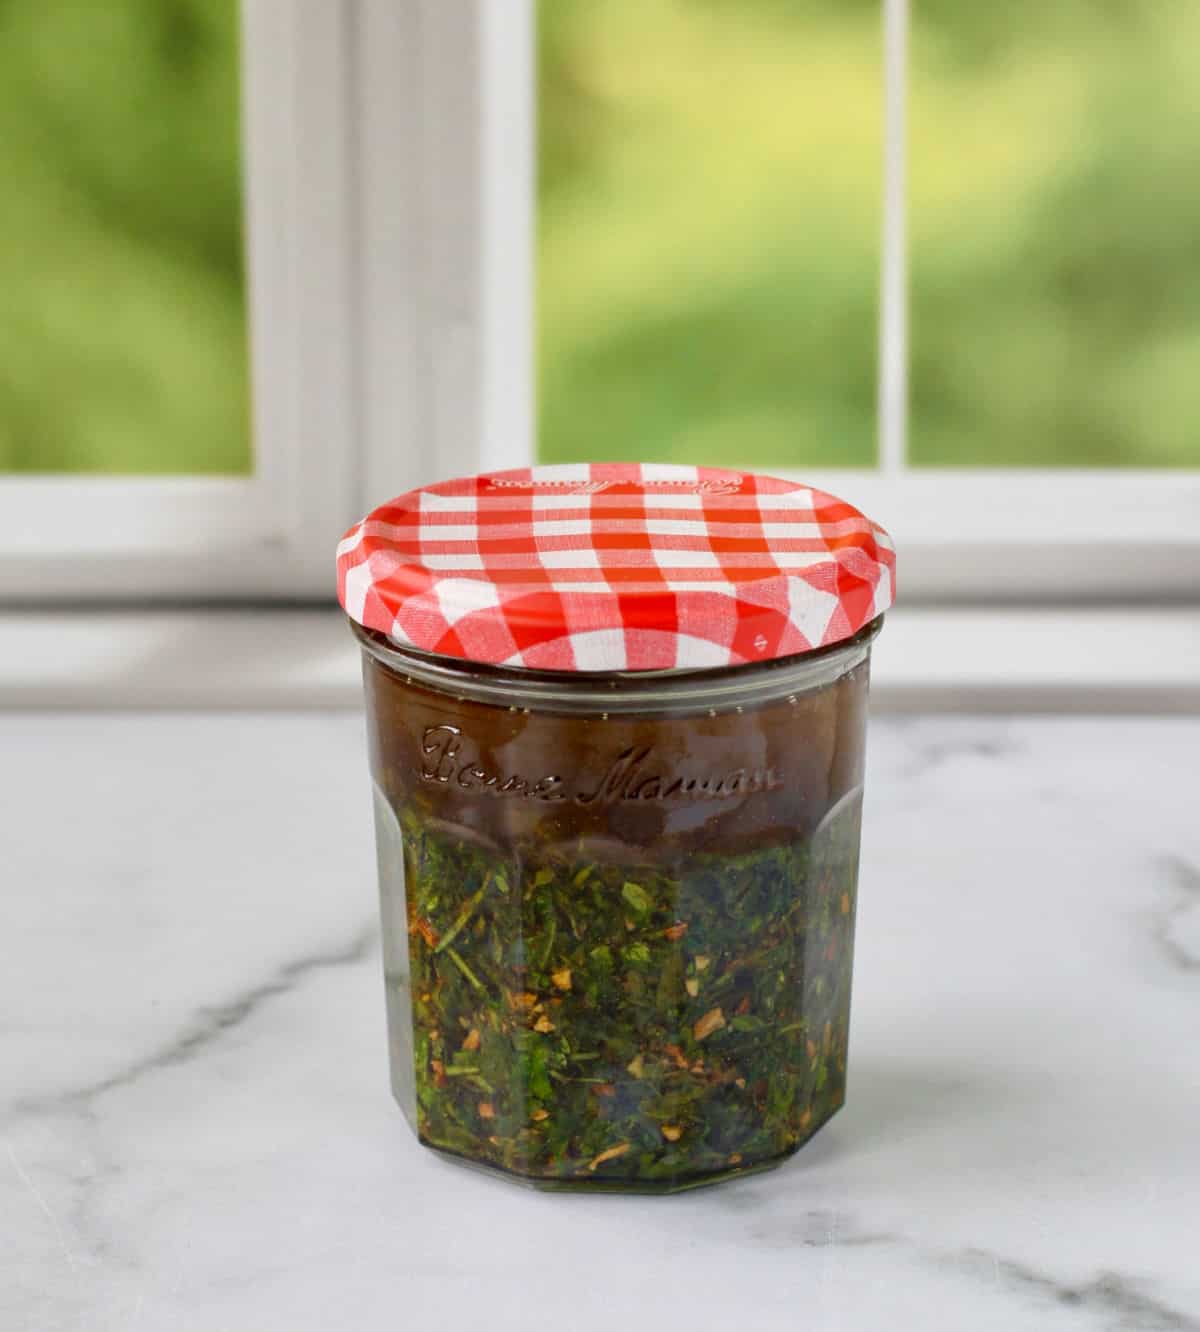 Balsamic Vinegar & Sea Salt Seasoning in a Spice Jar by Firehouse